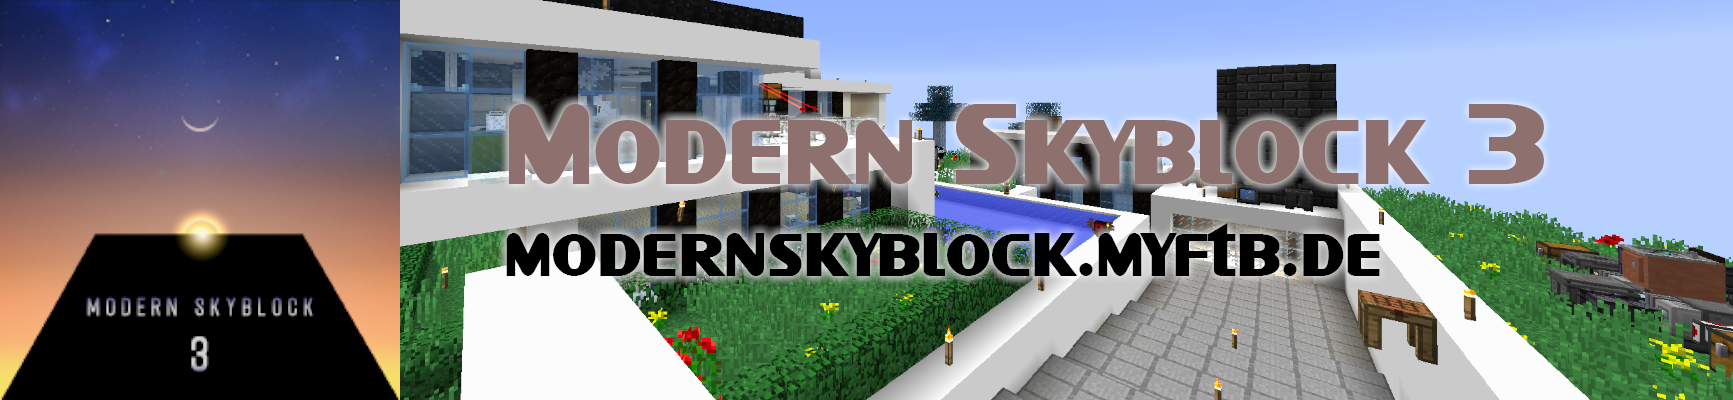 ModernSkyblock 3